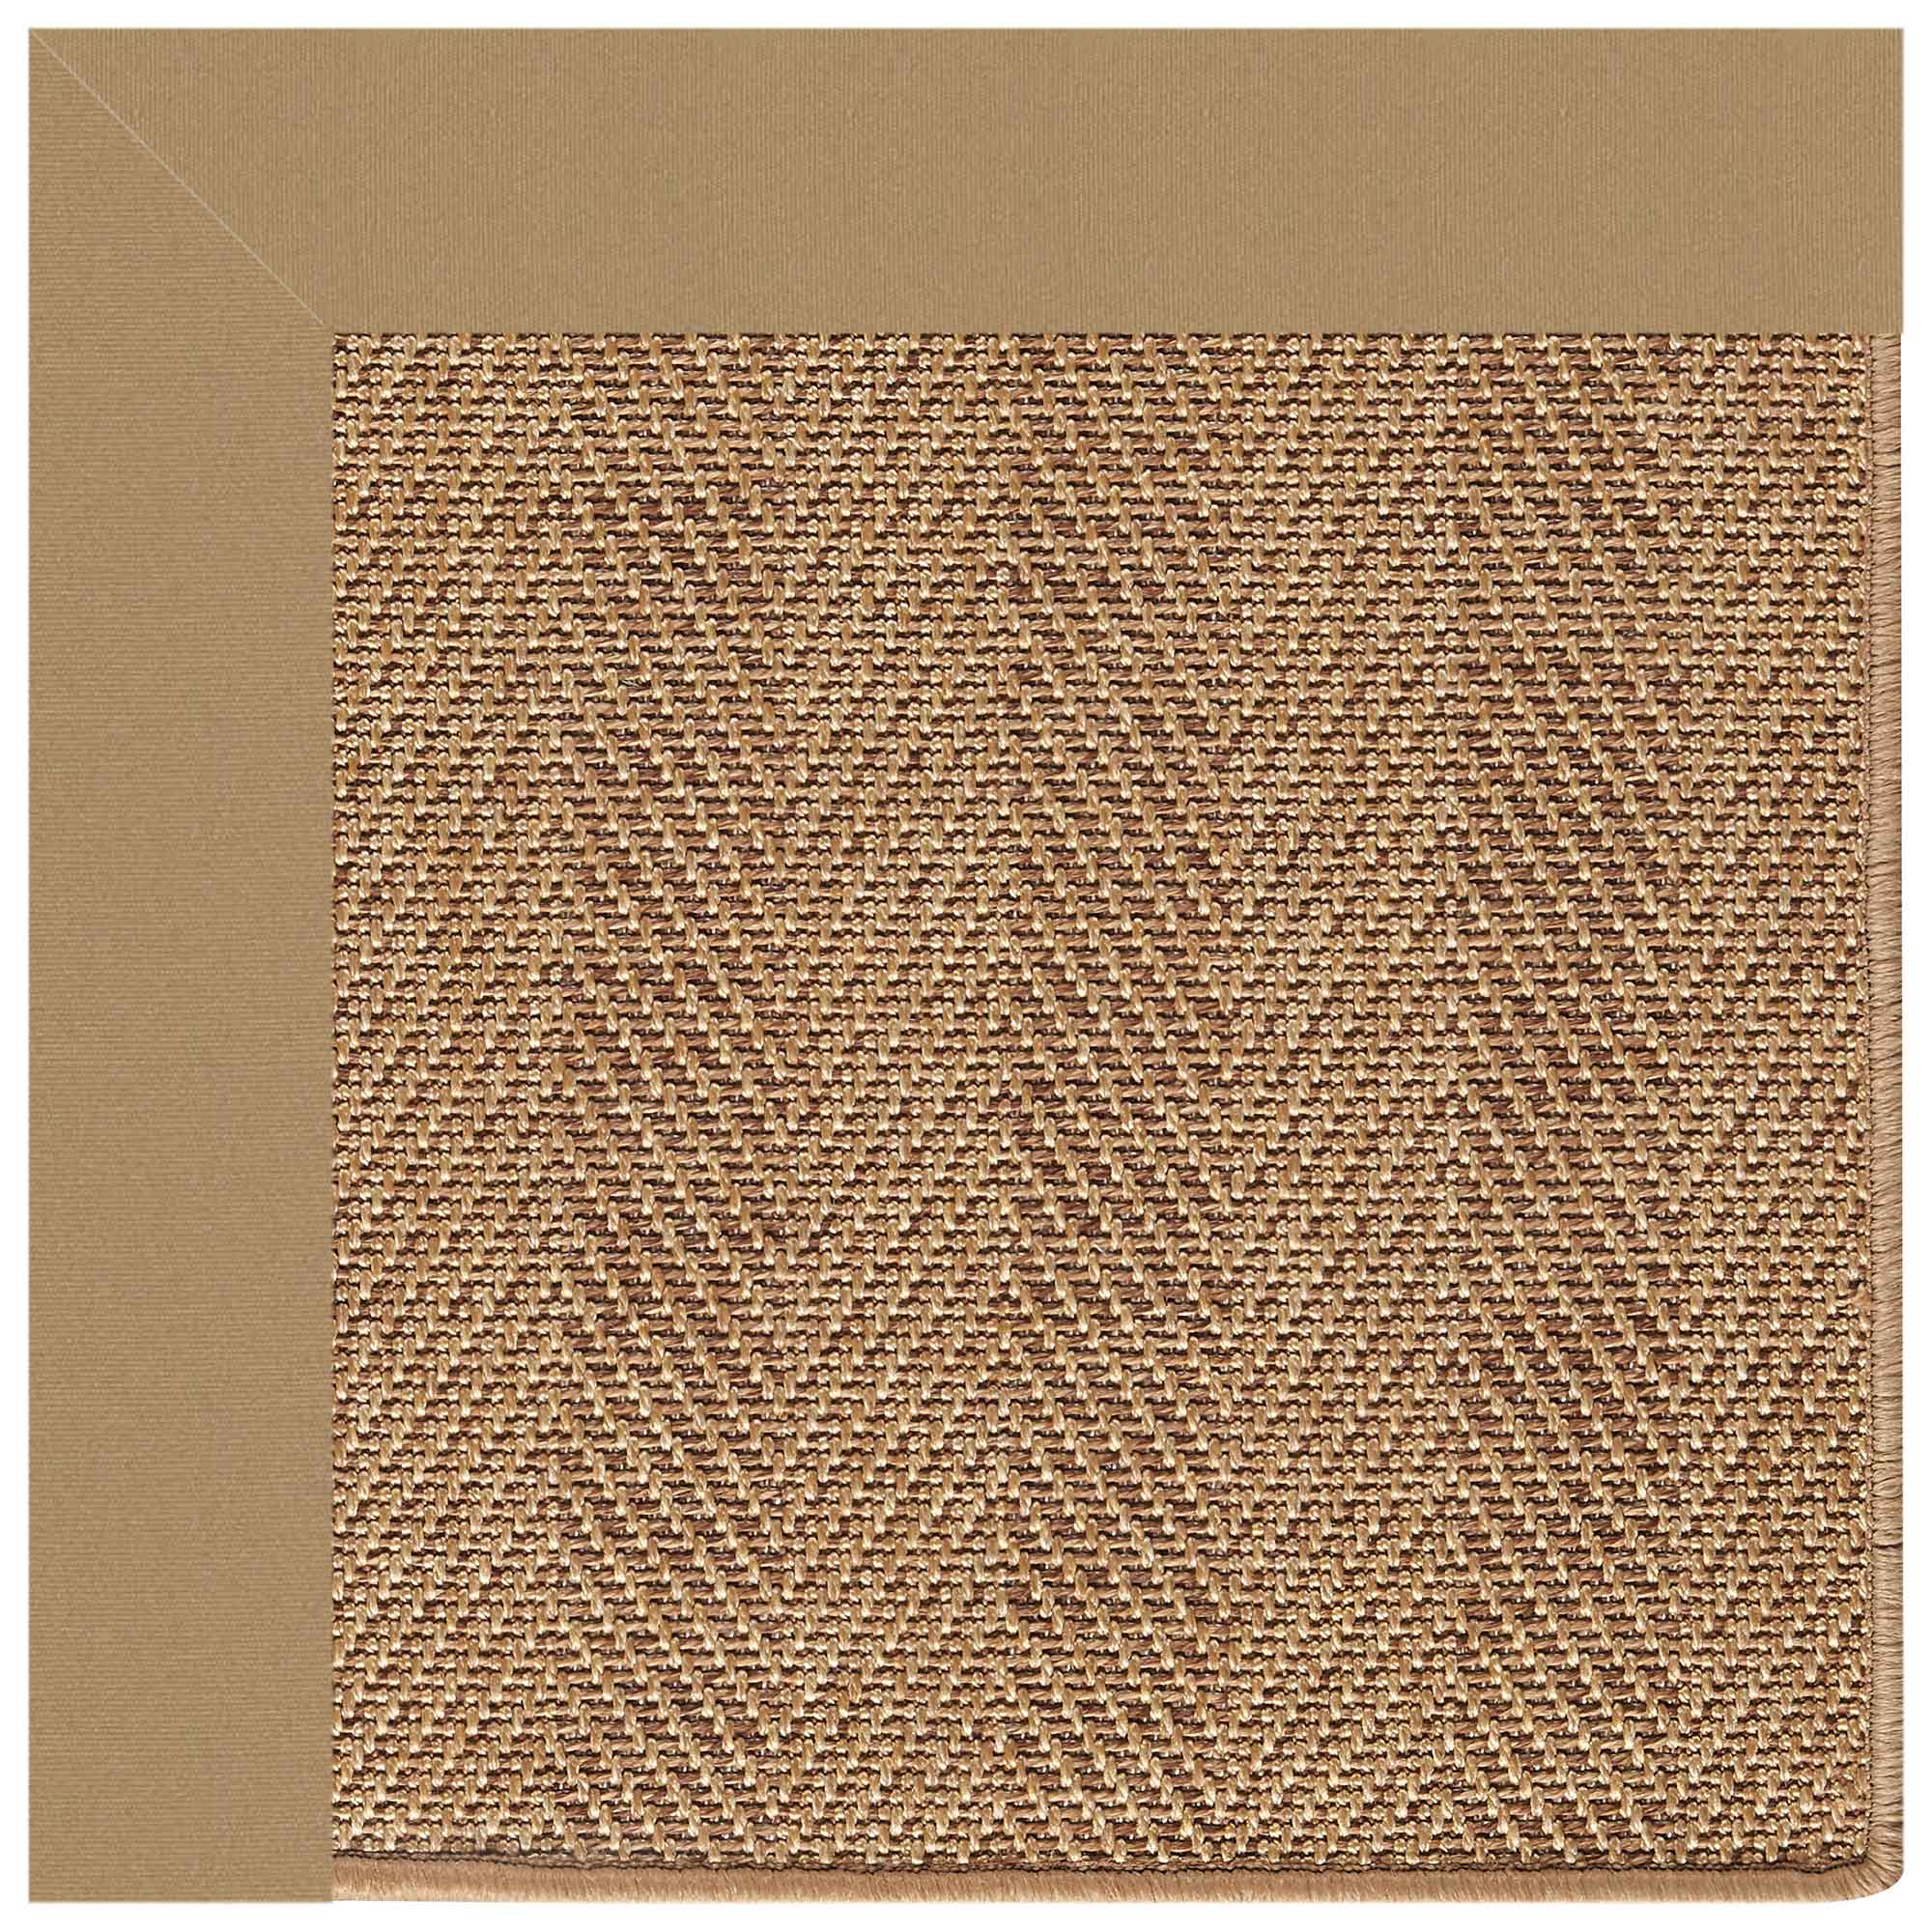 Islamorada-Herringbone Canvas Linen